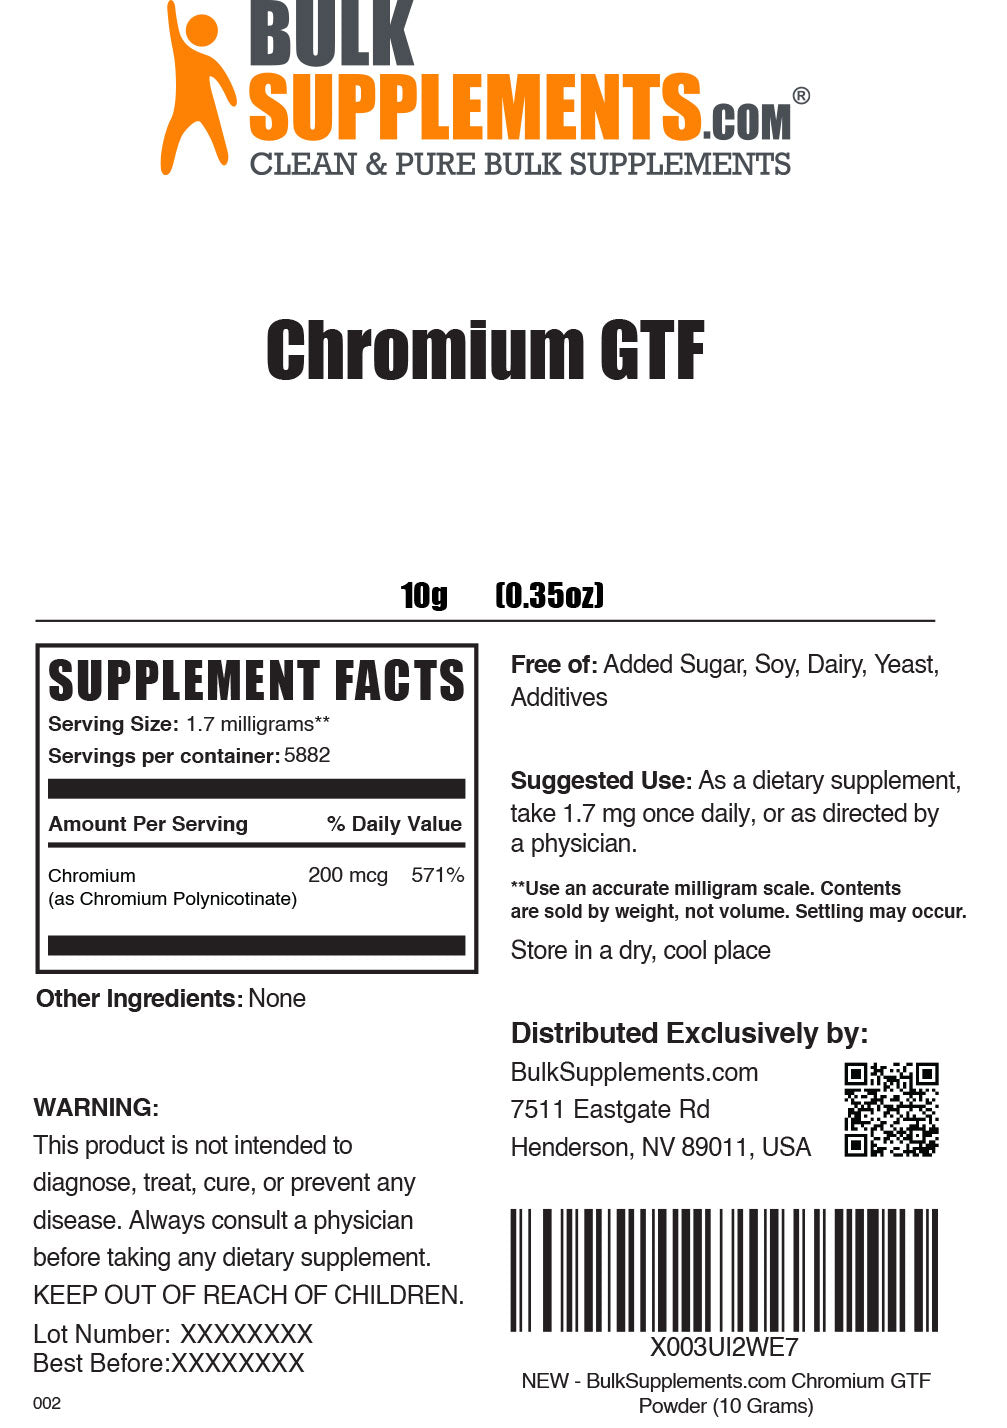 10g chromium GTF supplement facts label